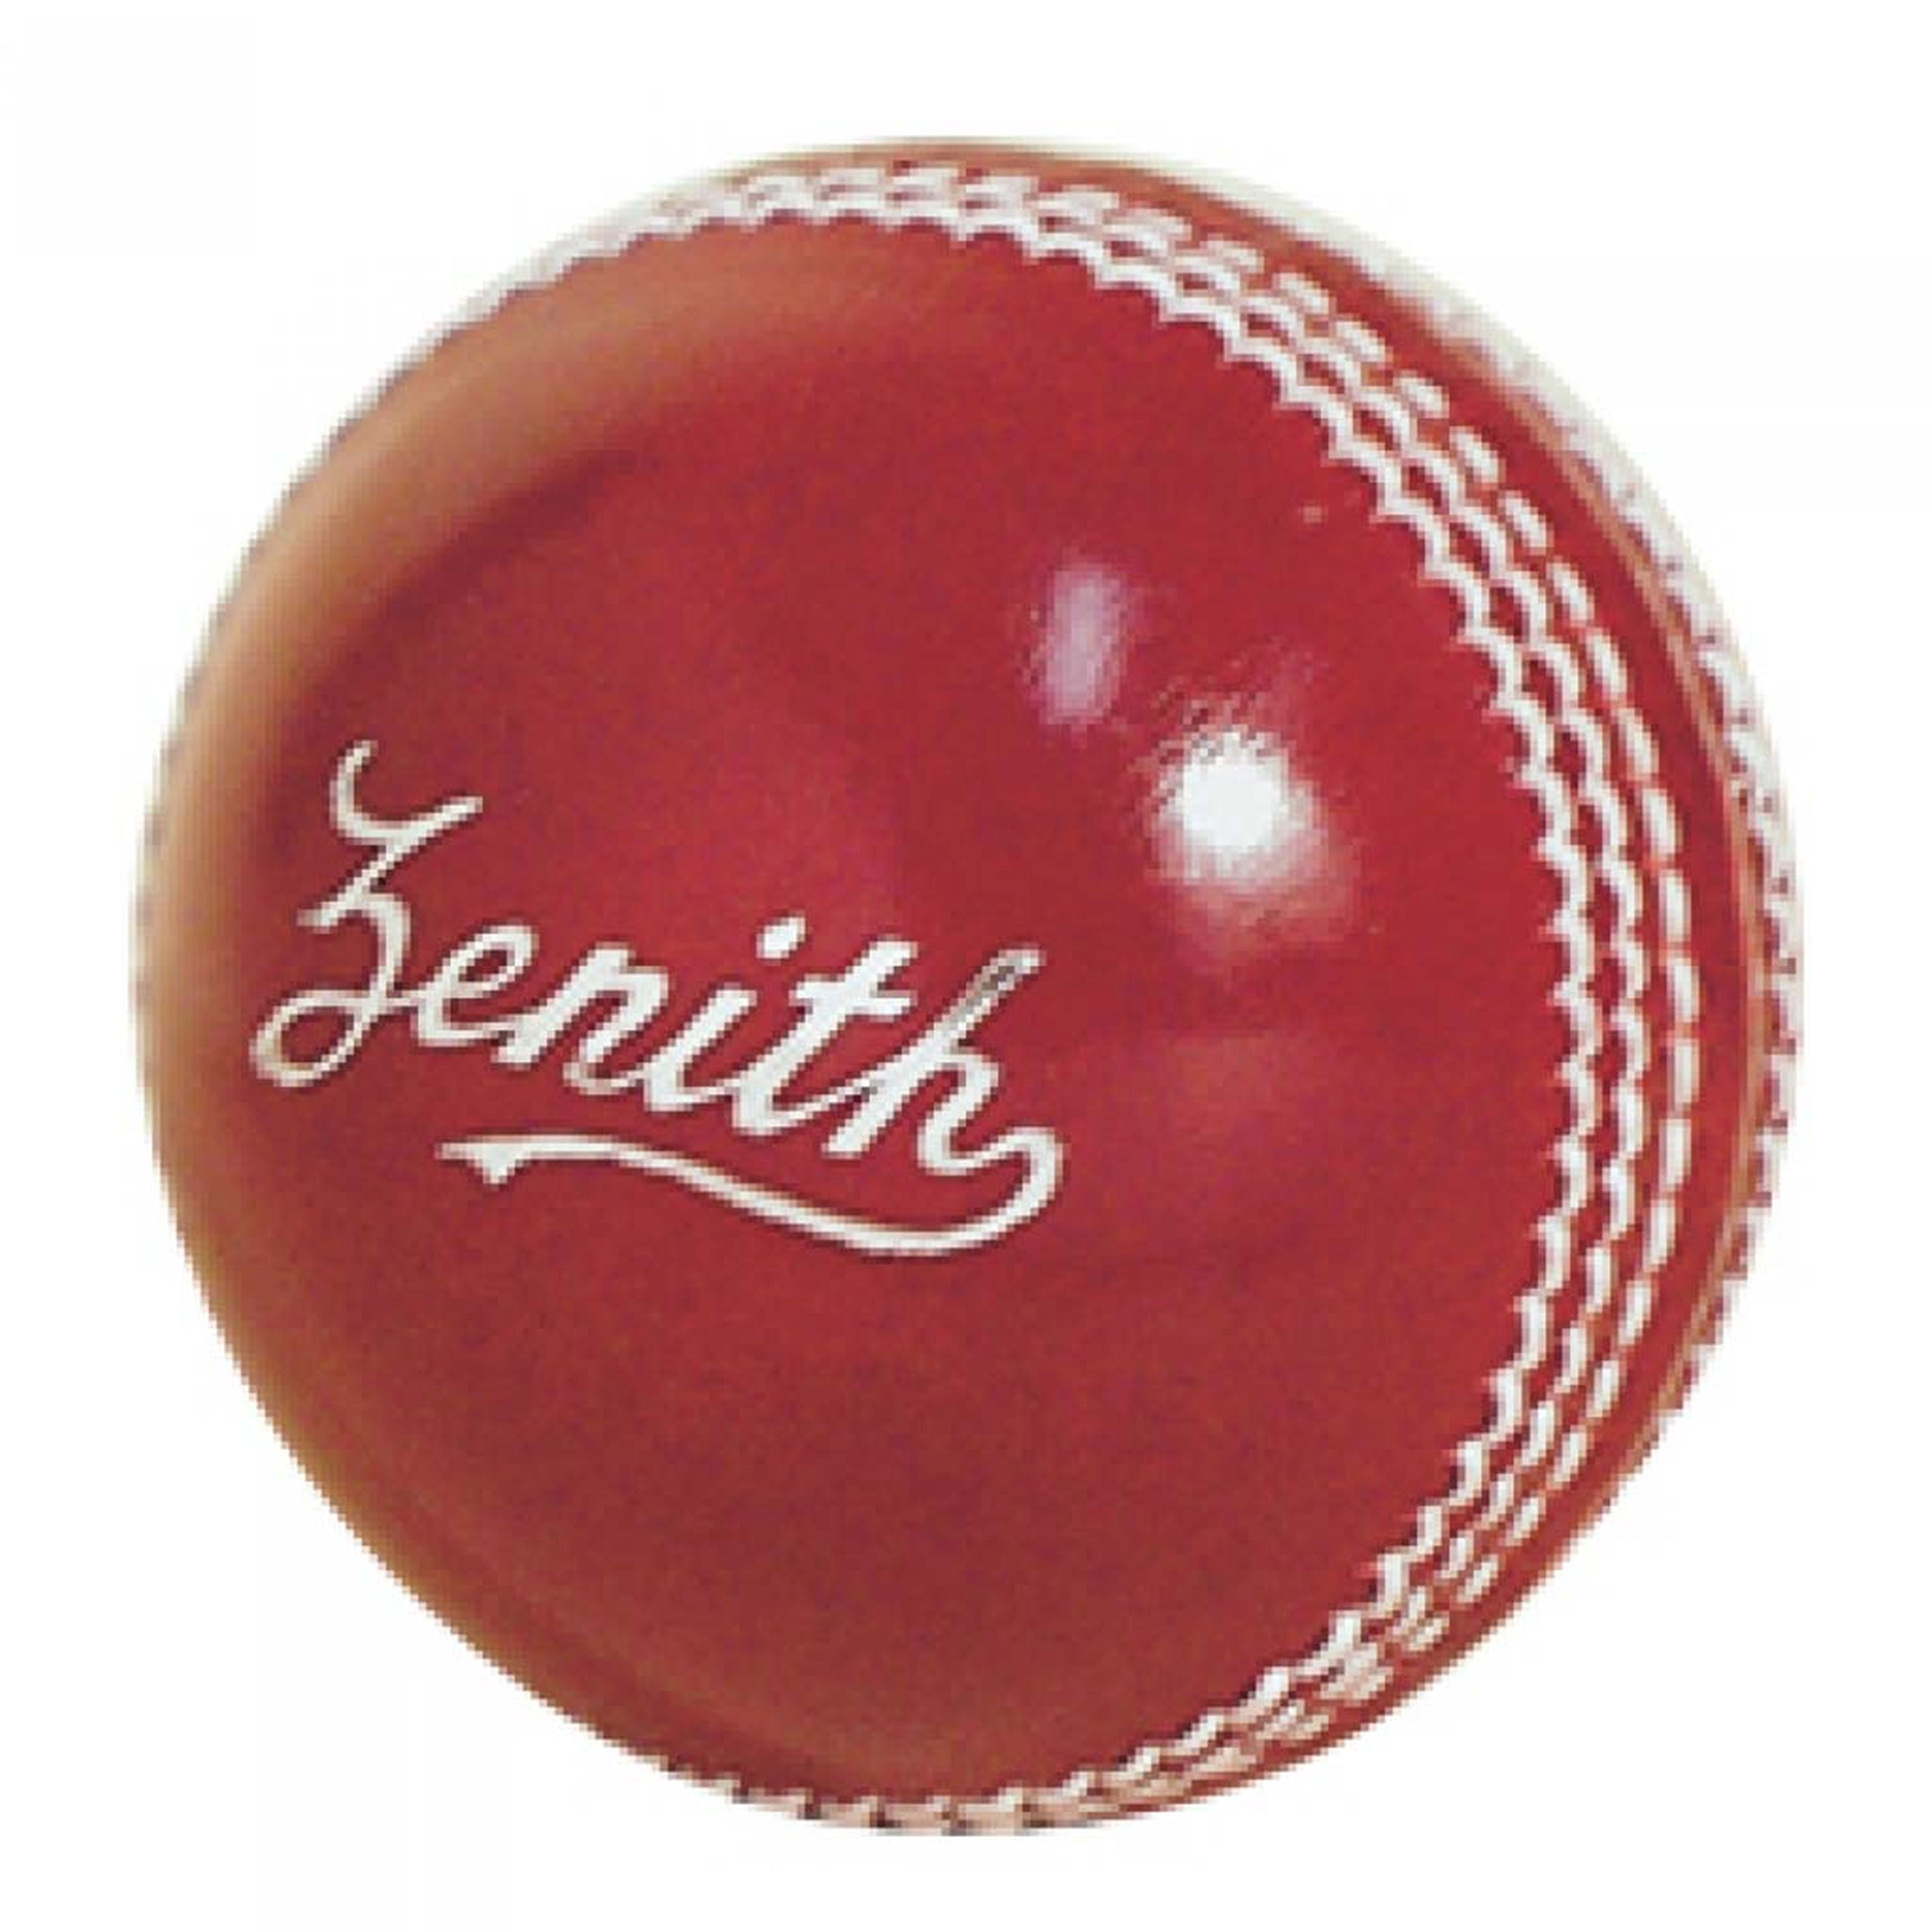 Kookaburra Zenith Cricket Ball - The Cricket Warehouse